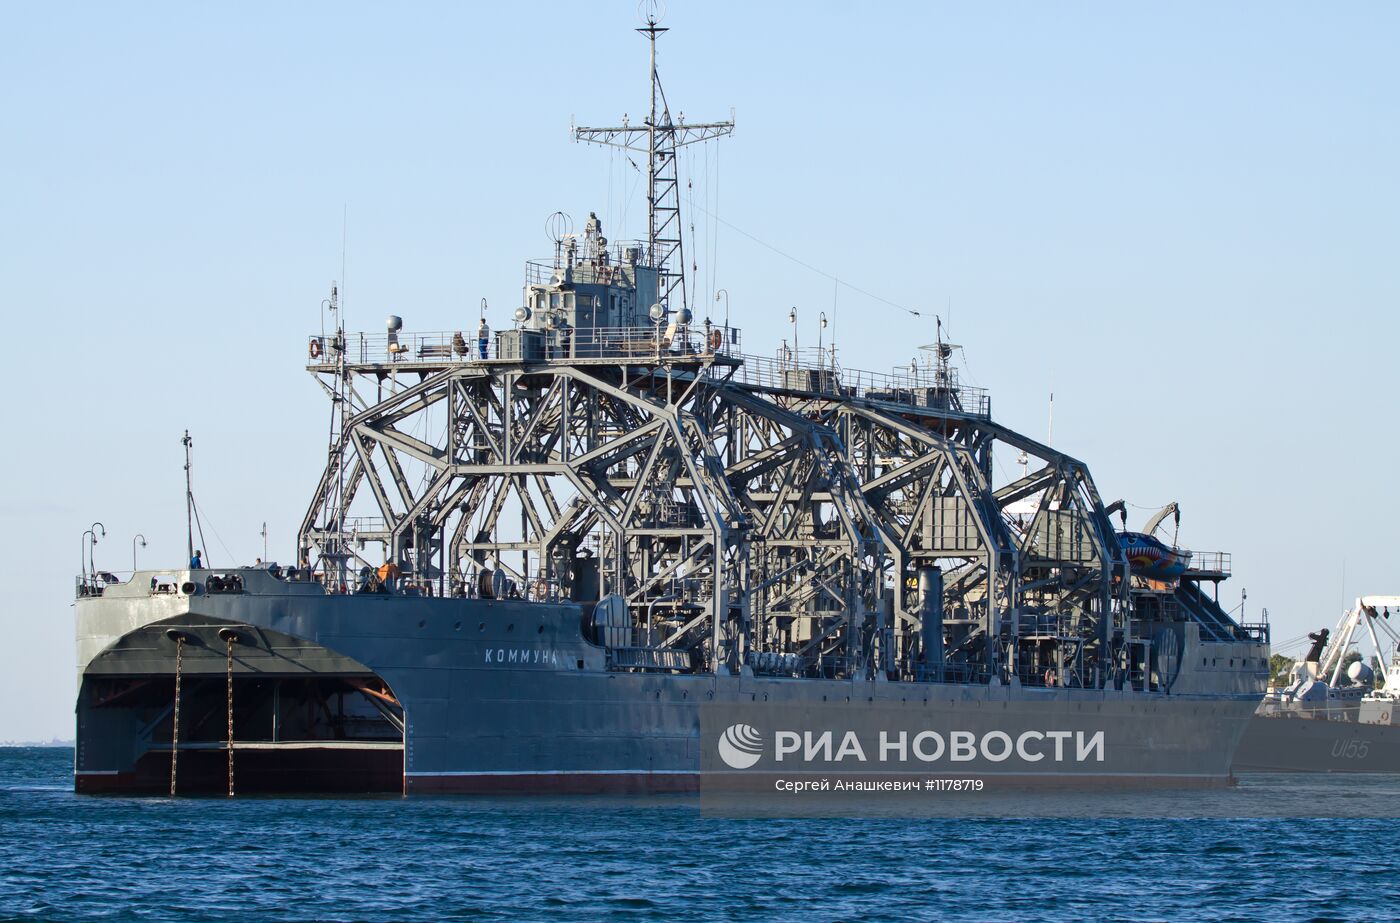 Судоподъемное судно "Коммуна" Черноморского флота РФ